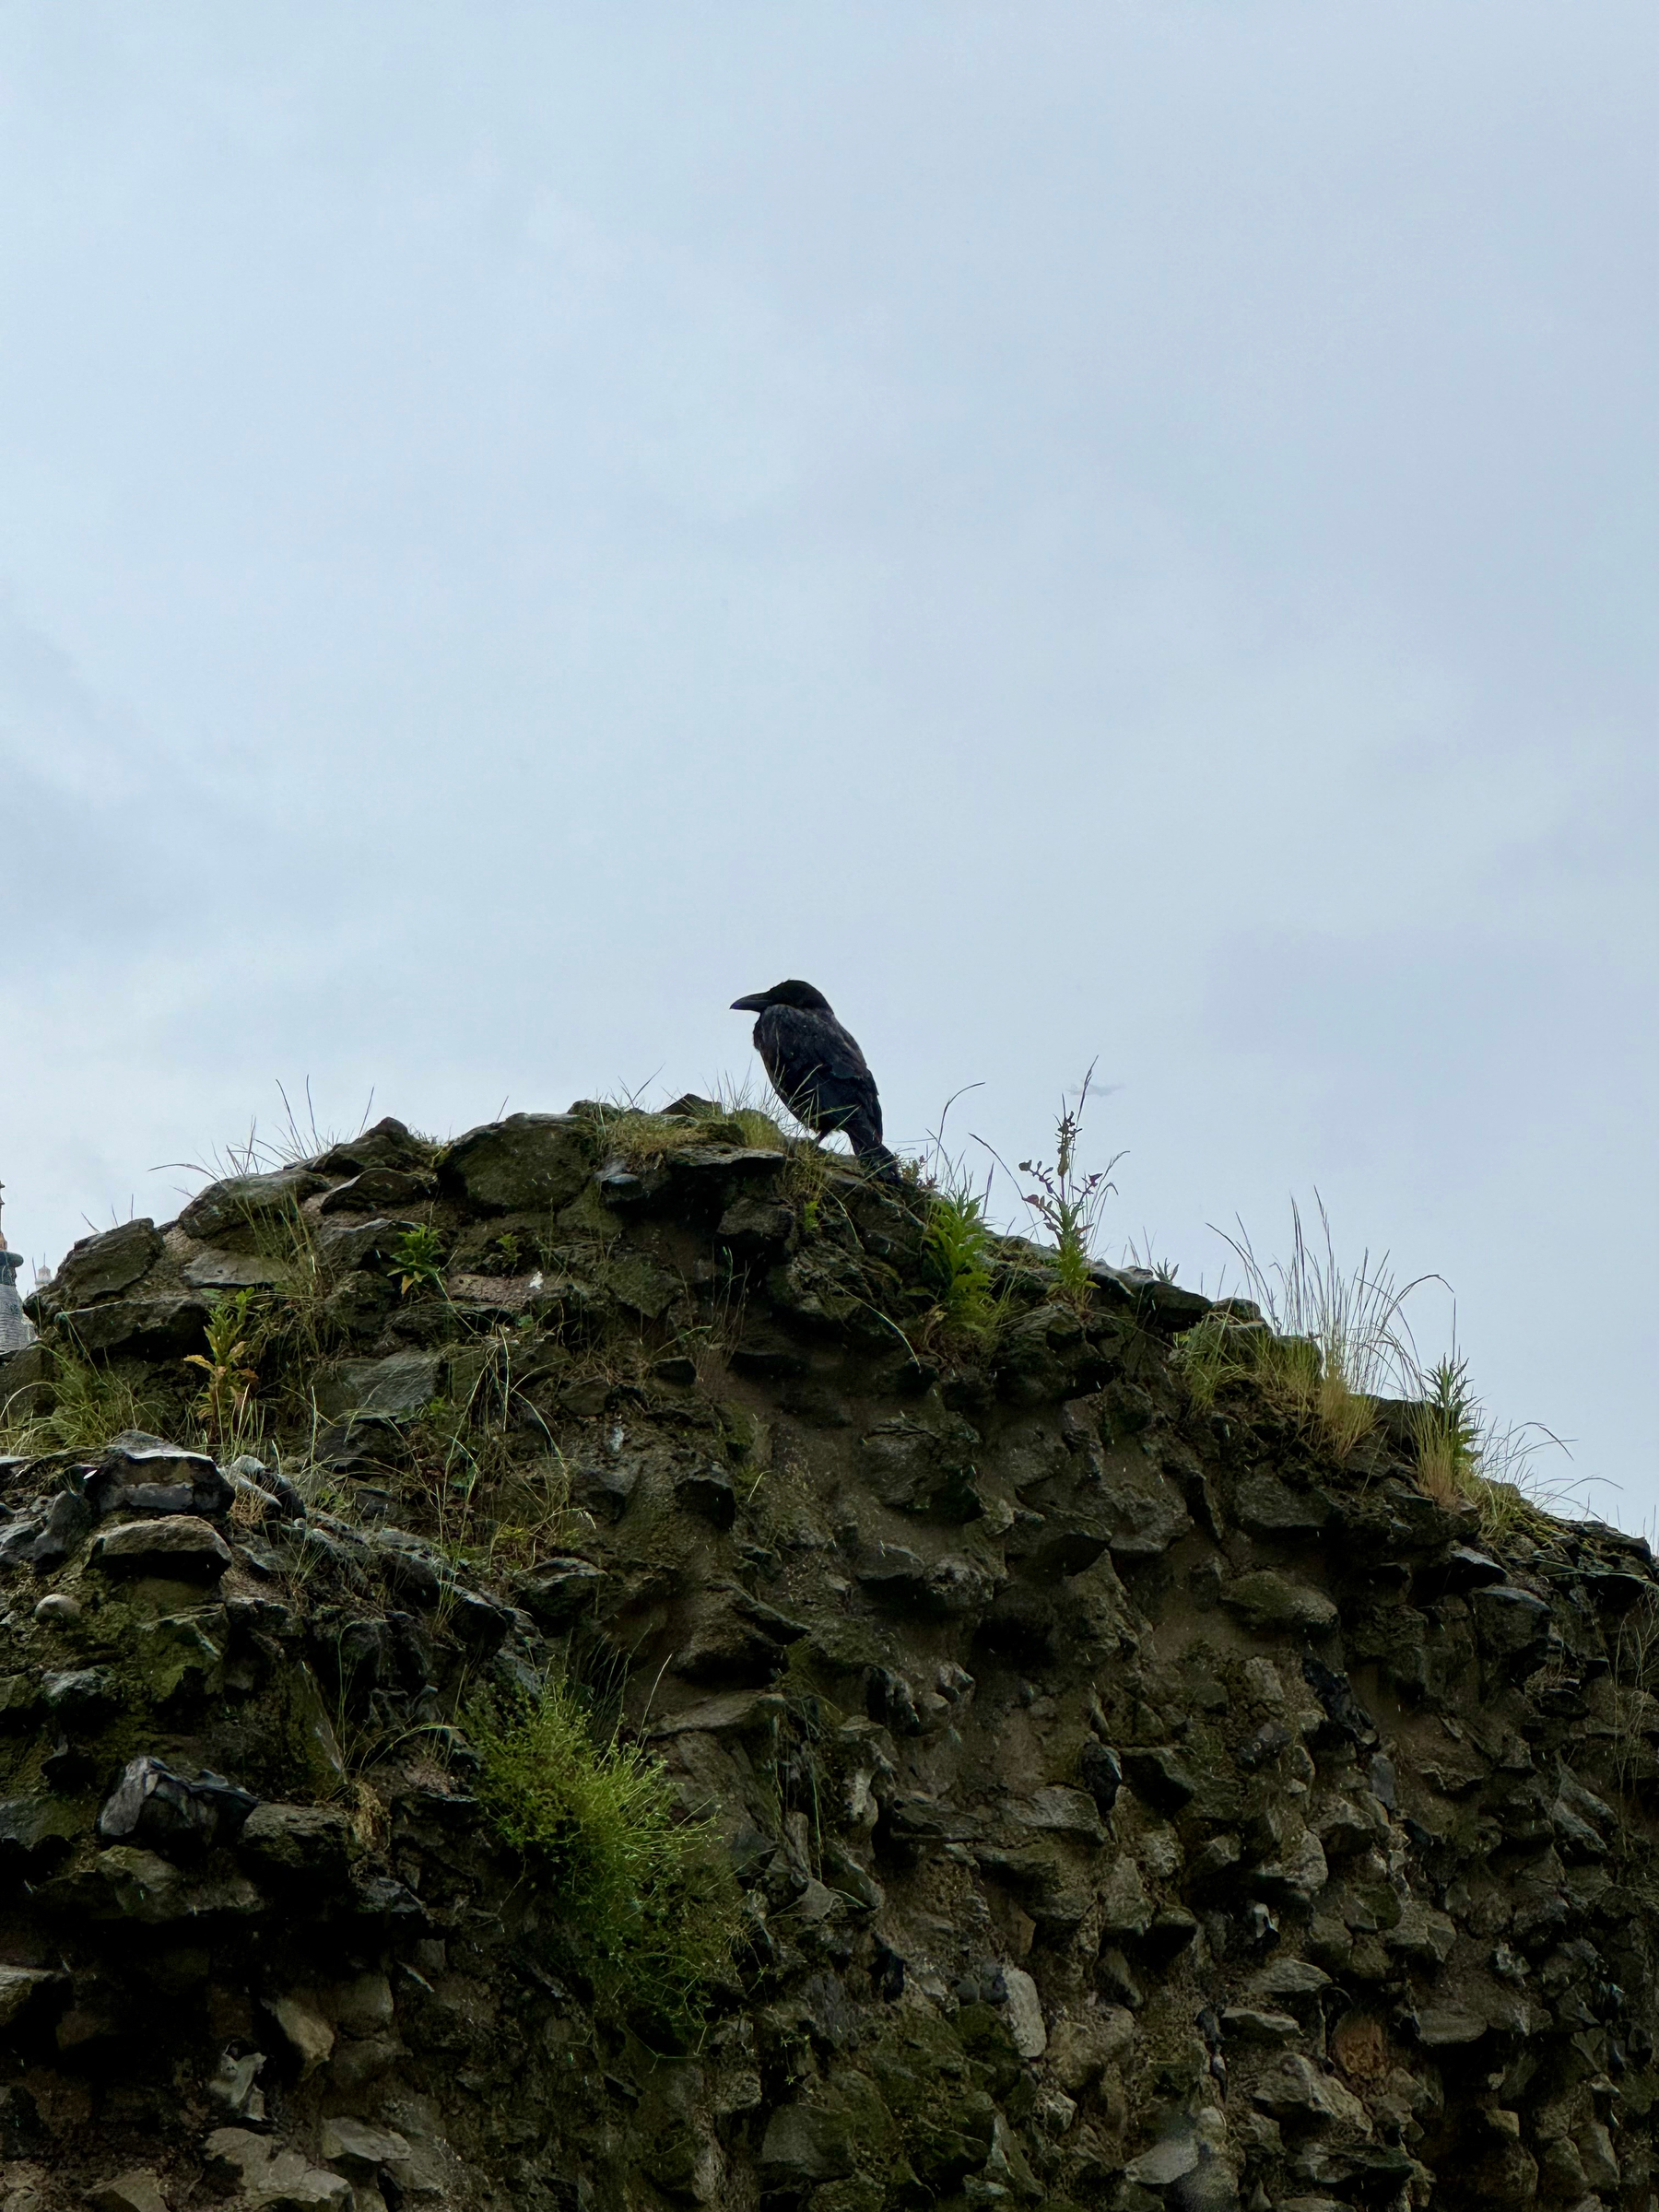 A raven perched atop a rocky outcrop against a pale sky background.